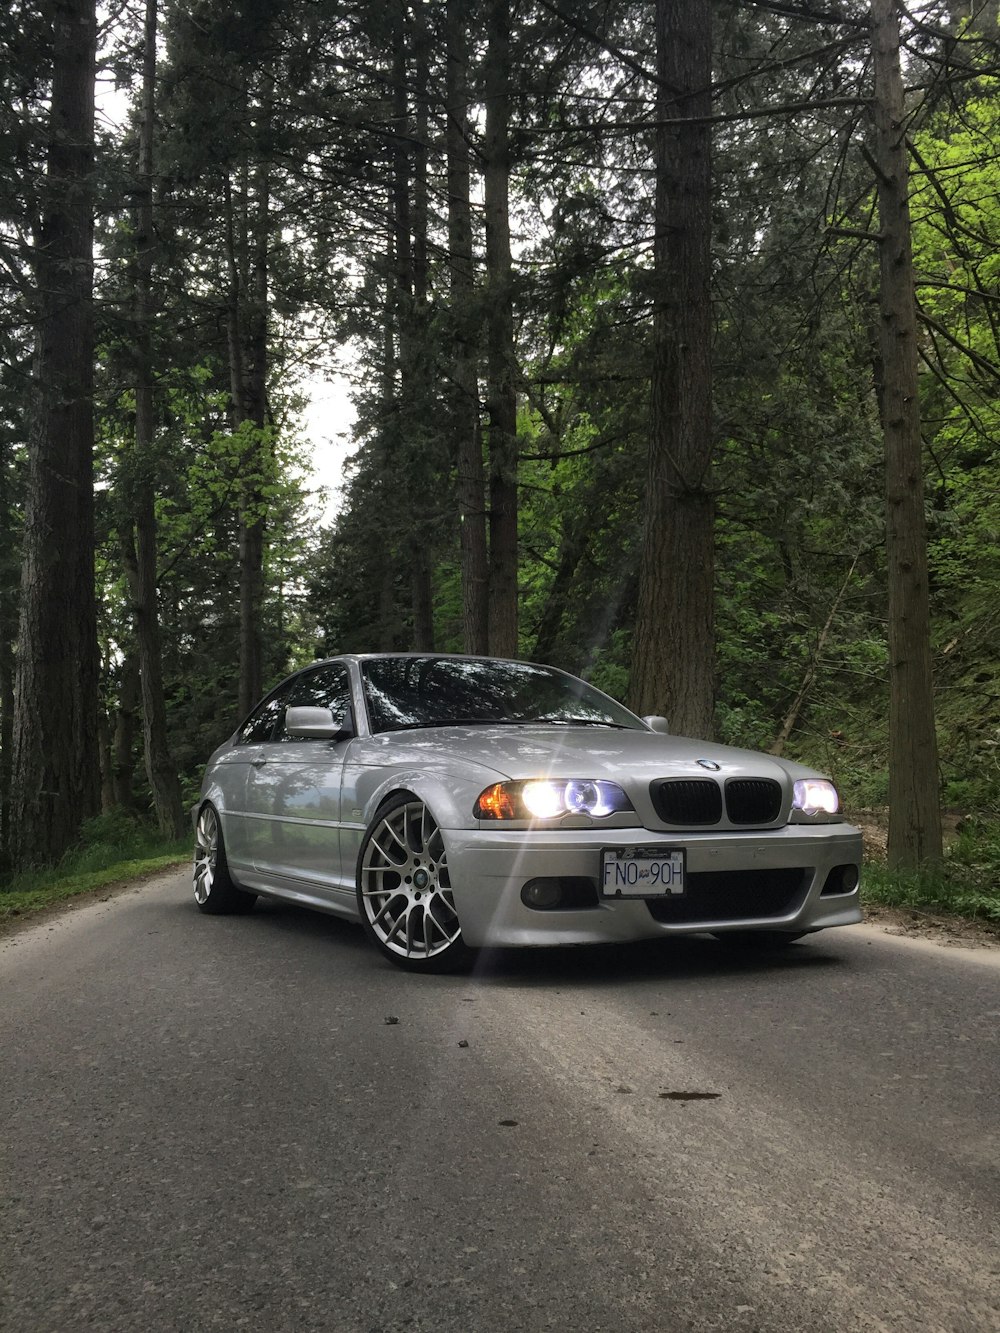 silver BMW sedan on road between trees during daytime